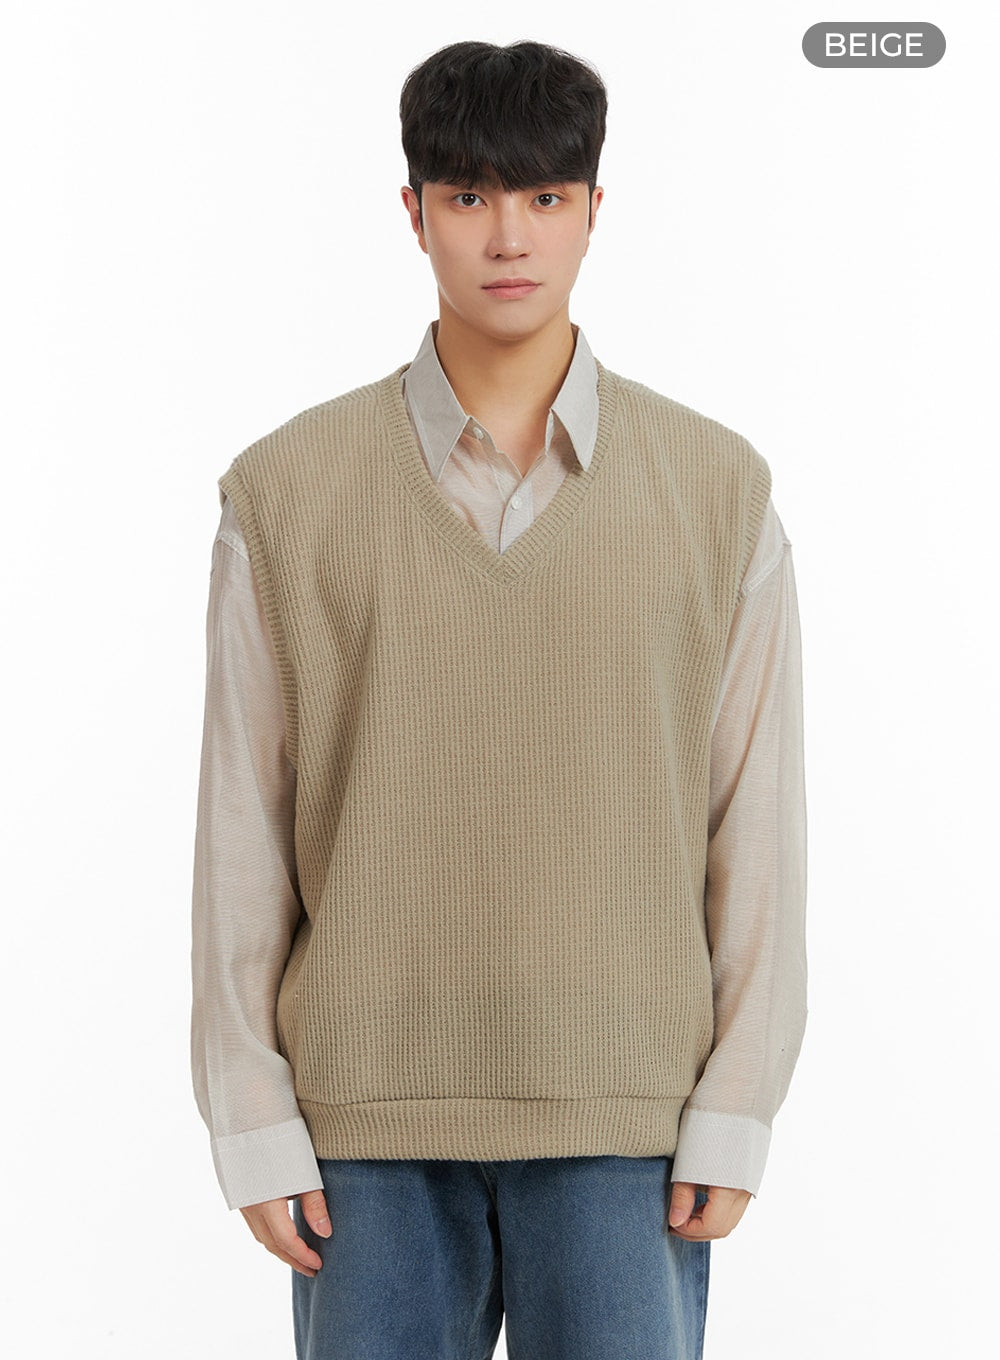 mens-solid-knit-sweater-vest-ia402 / Beige